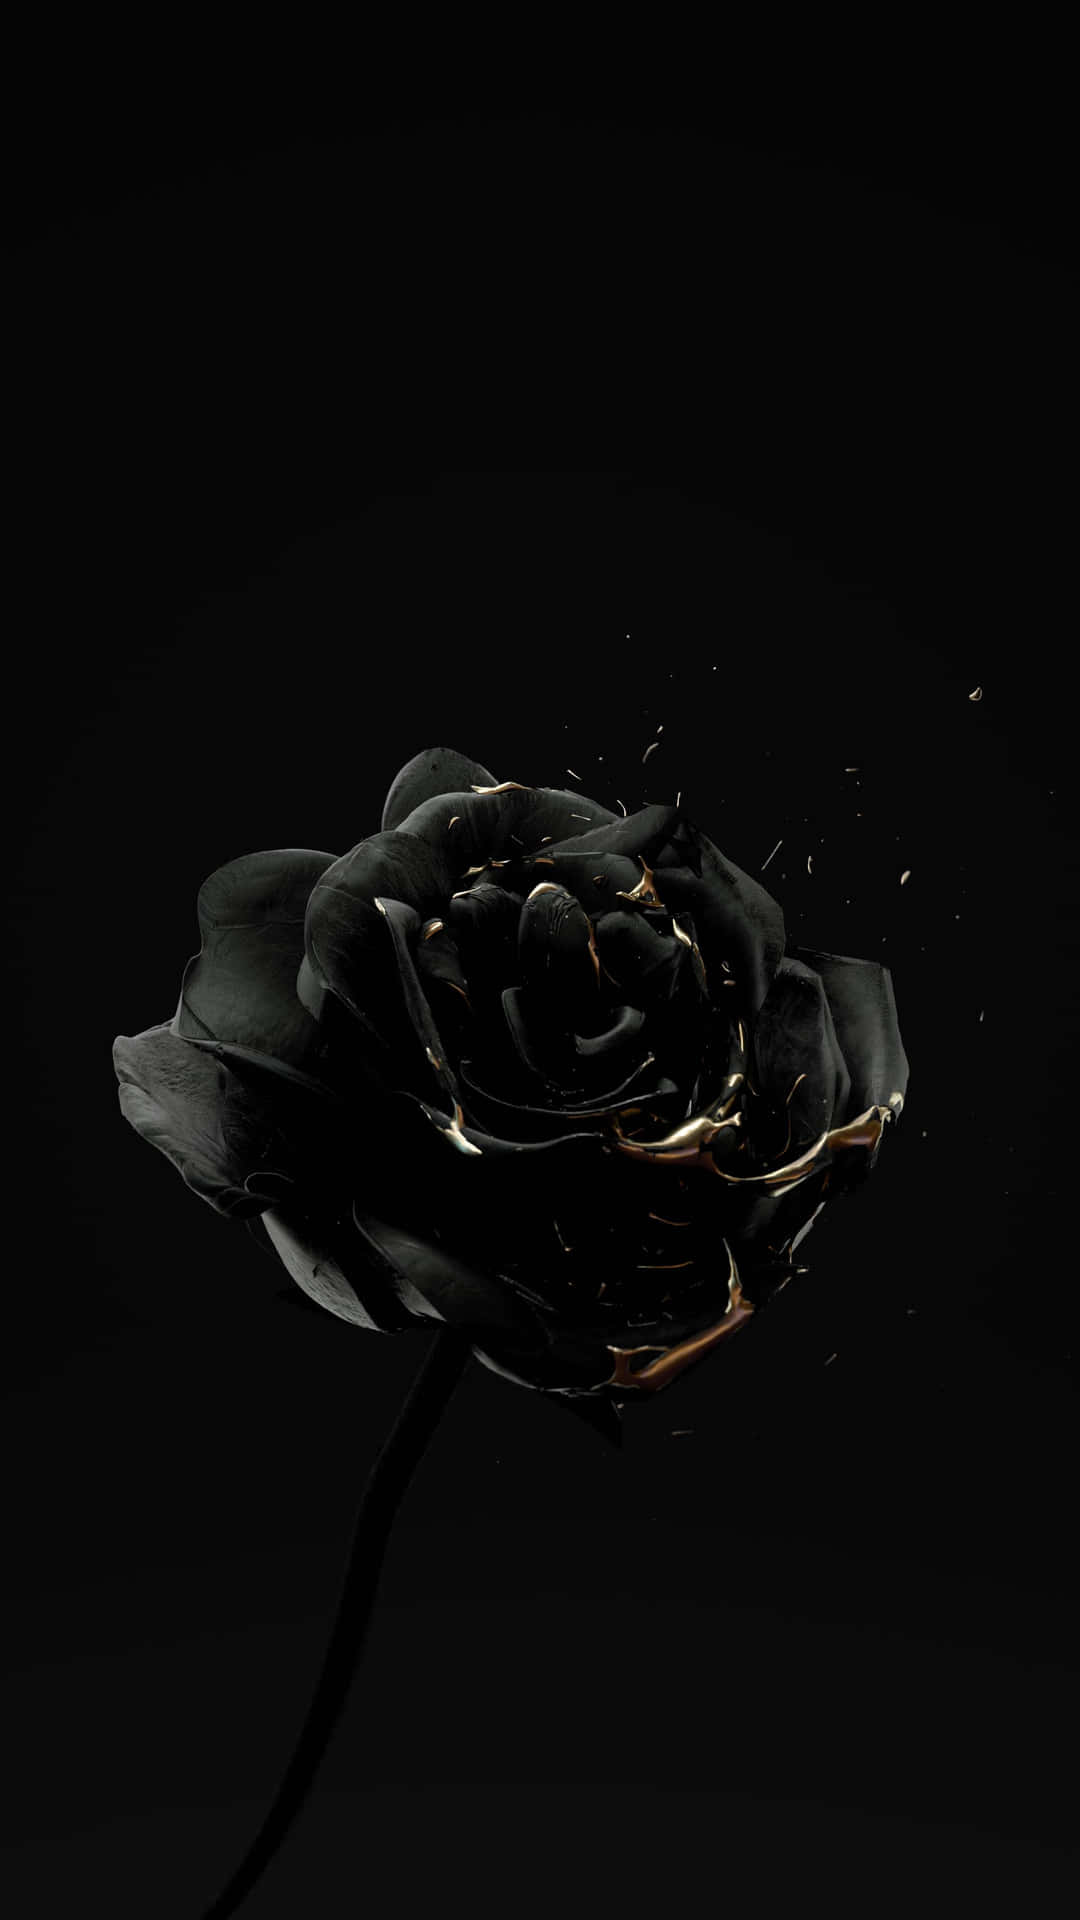 "elegant Solitude: A Single Black Rose In Bloom"